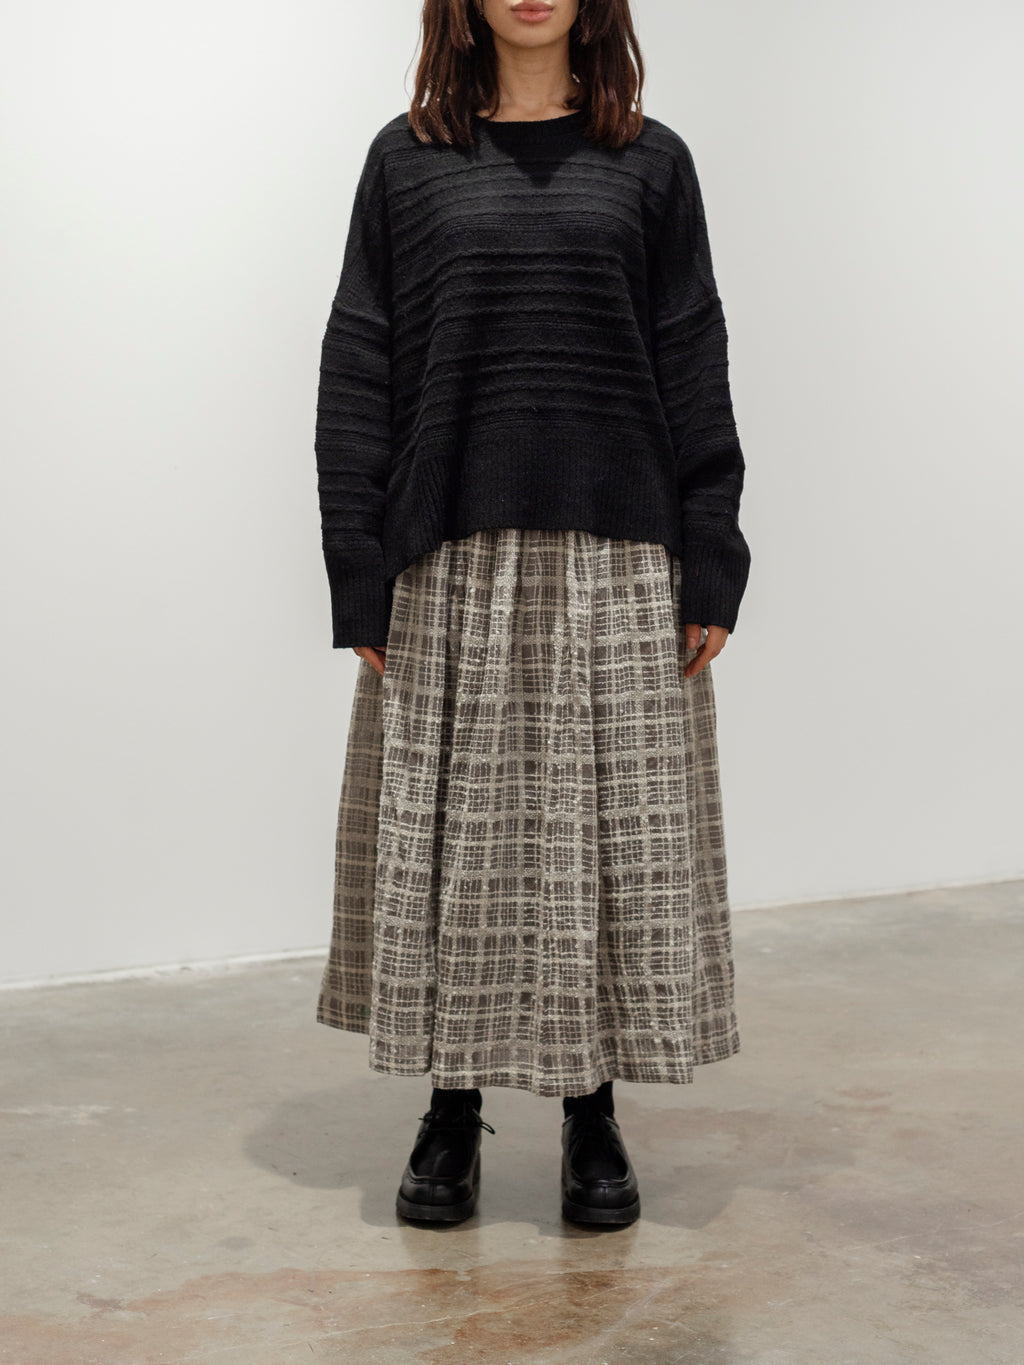 Namu Shop - Ichi Antiquites Wool Check Skirt - Mocha